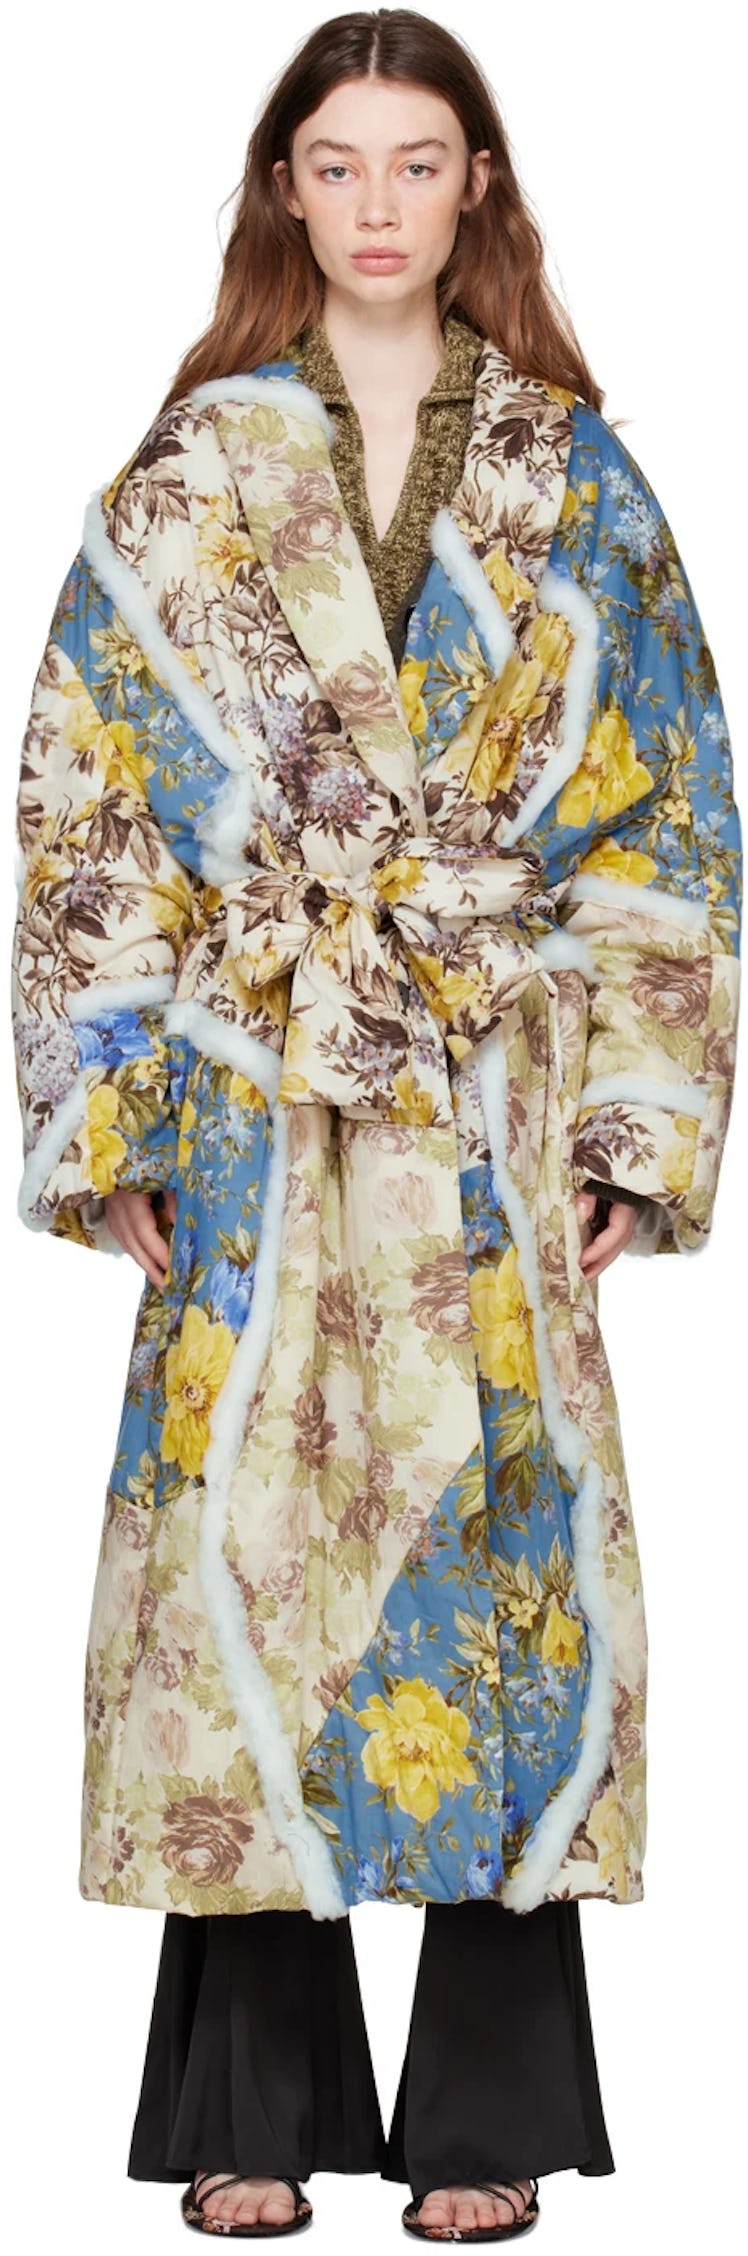 Beige & Blue Patch Flower Print Coat